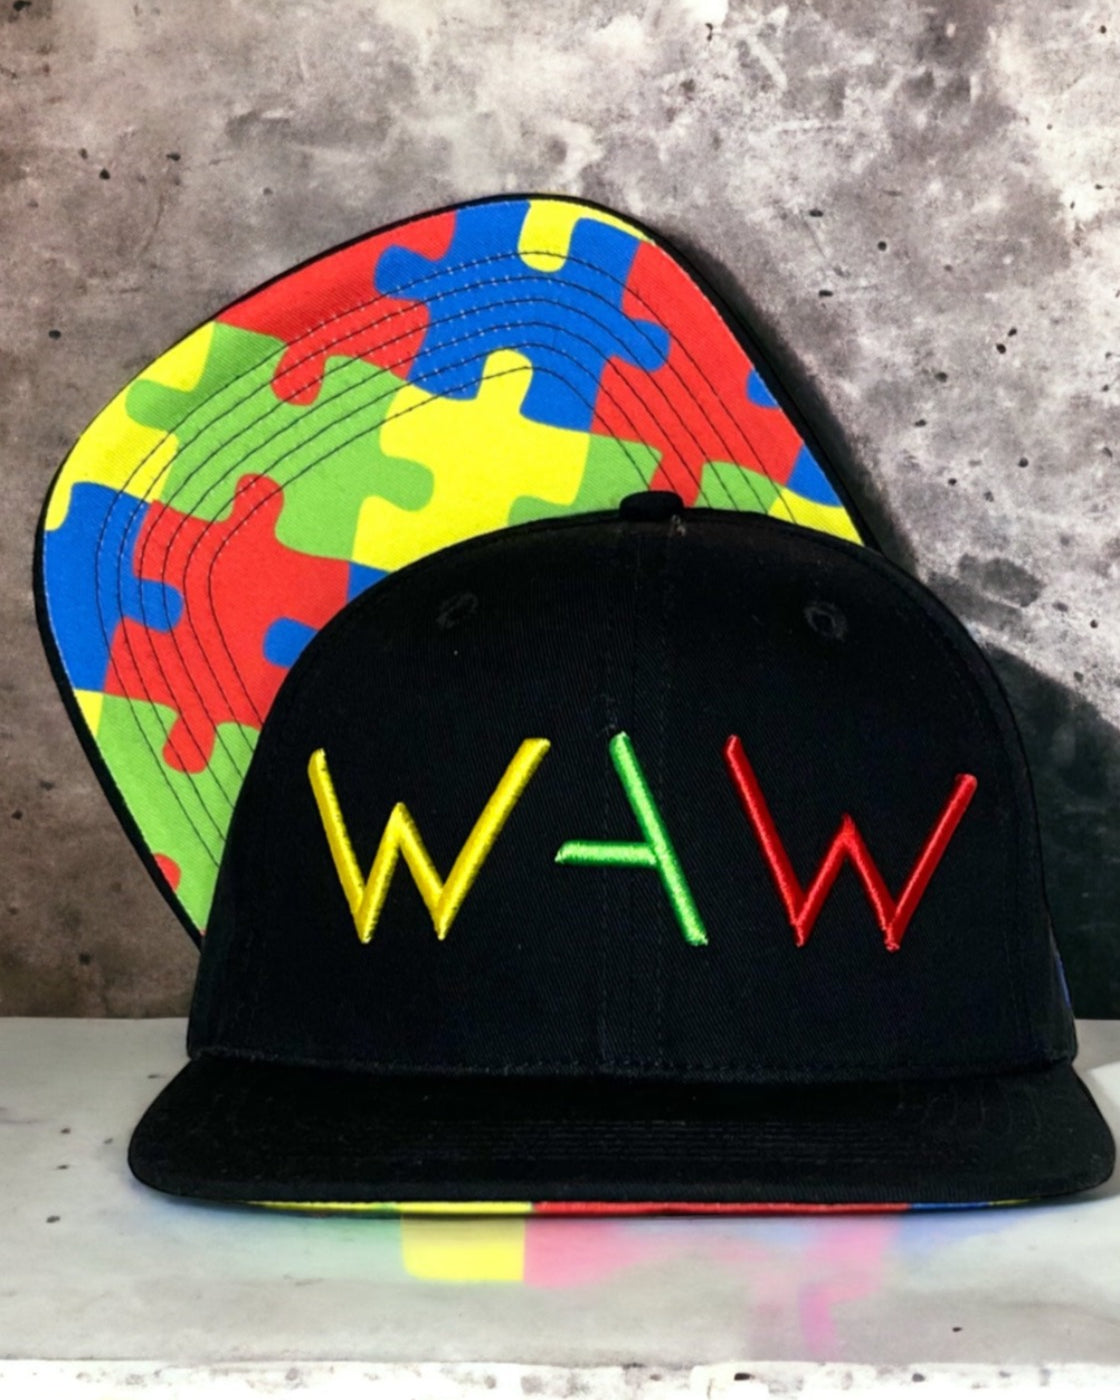 Autism Awareness Cap with WAW logo and Overcome message, WeAreWarriorsApparel.com